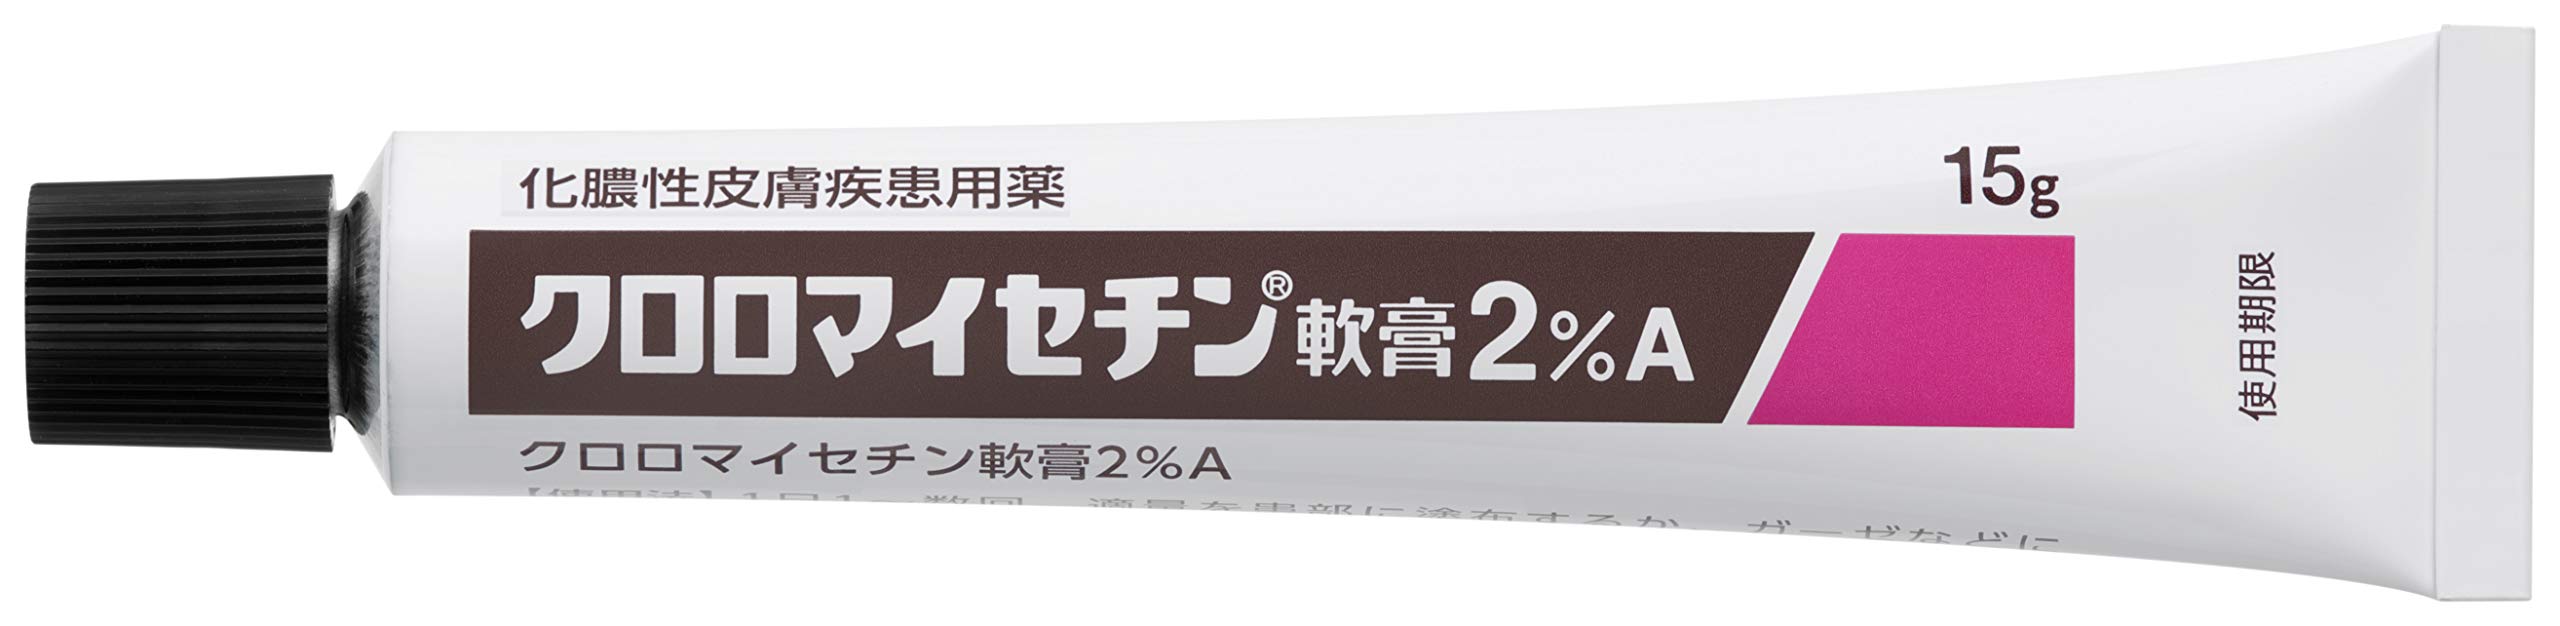 Kuromai Chloromycetin Ointment 2%A 15G Japan - 2 Drugs